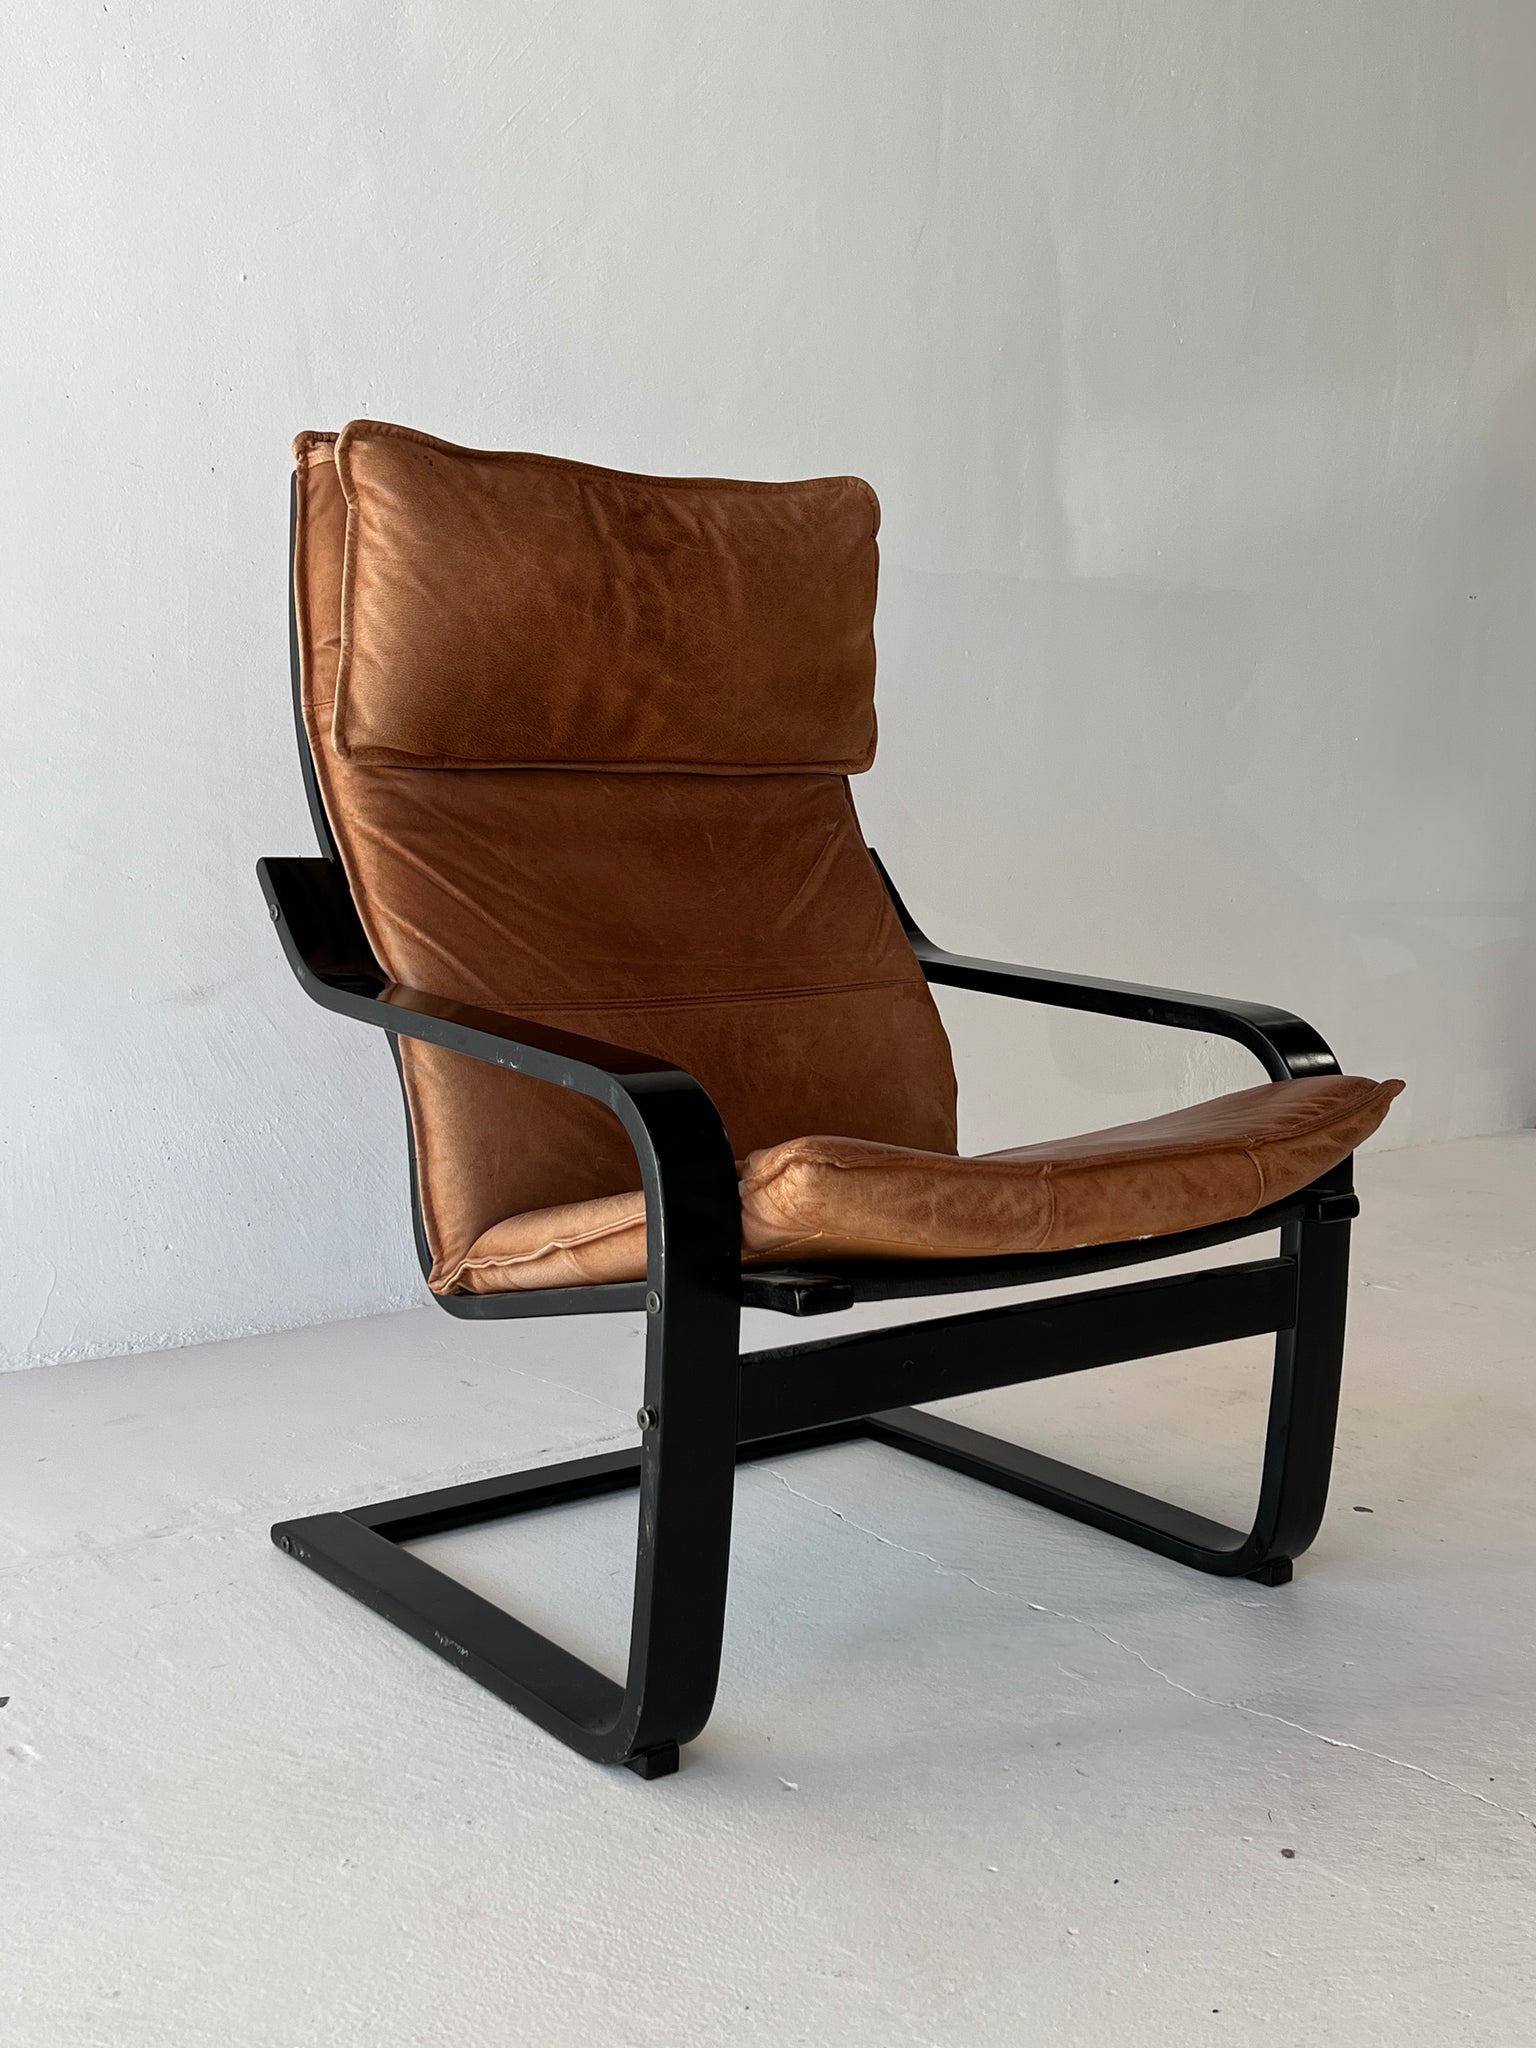 1970s Ikea Poang Chair